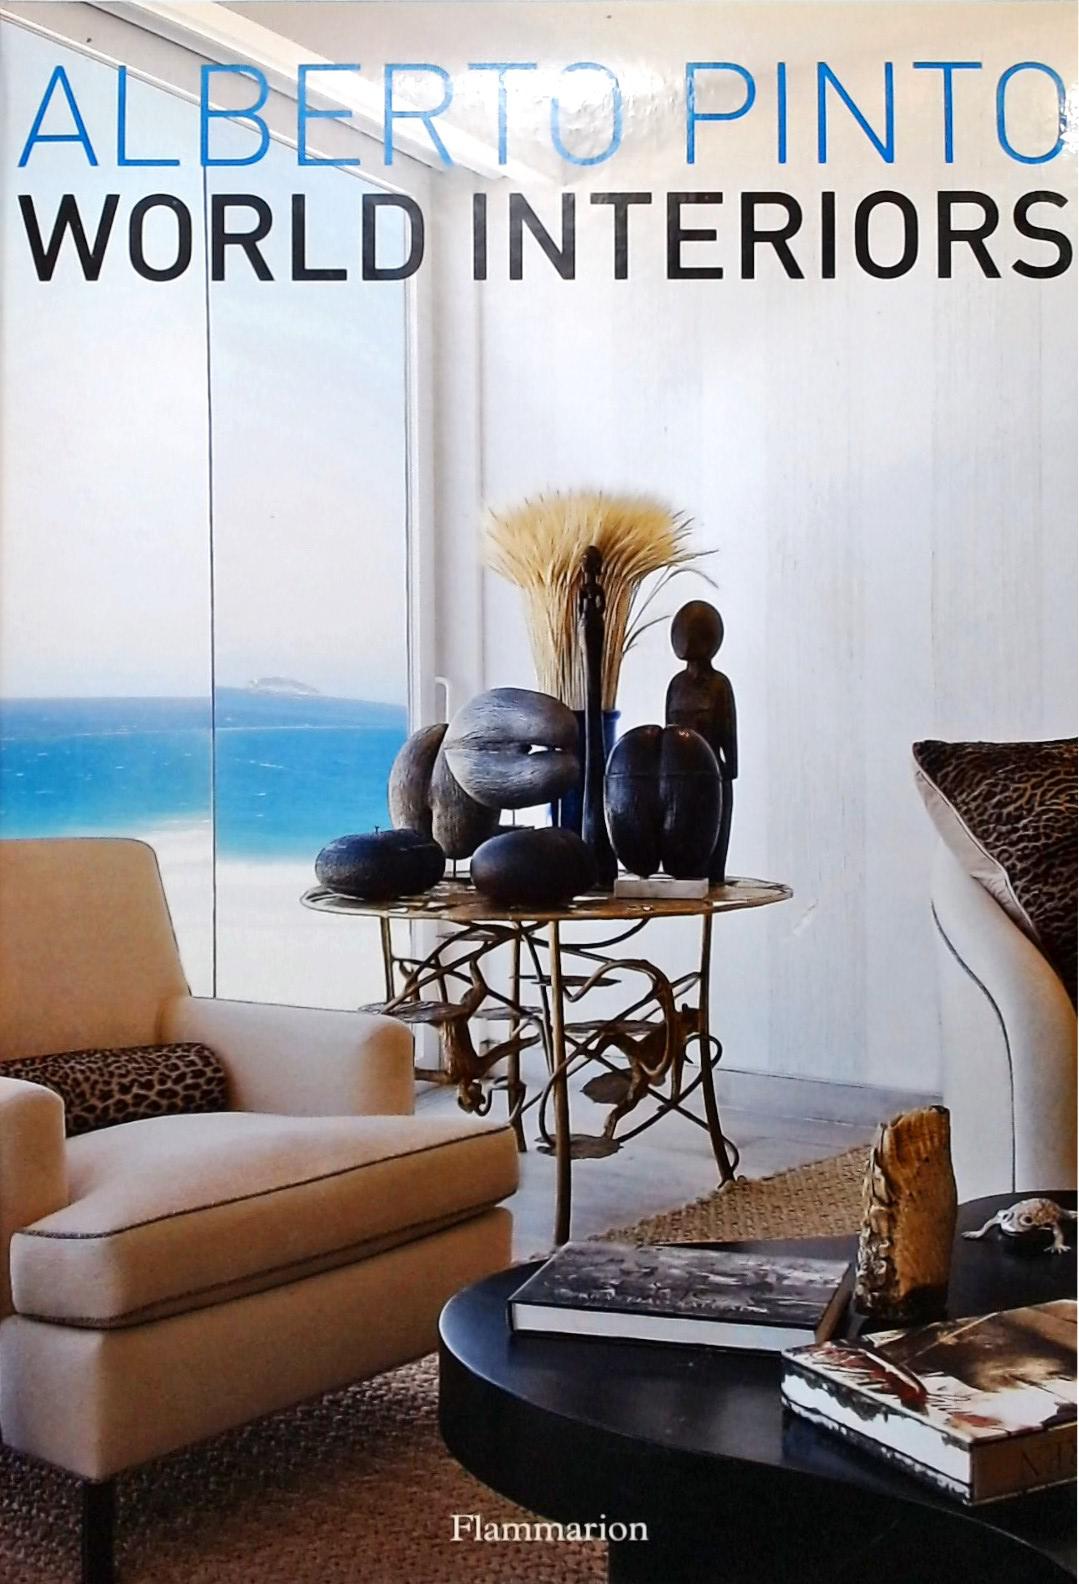 Alberto Pinto - World Interiors